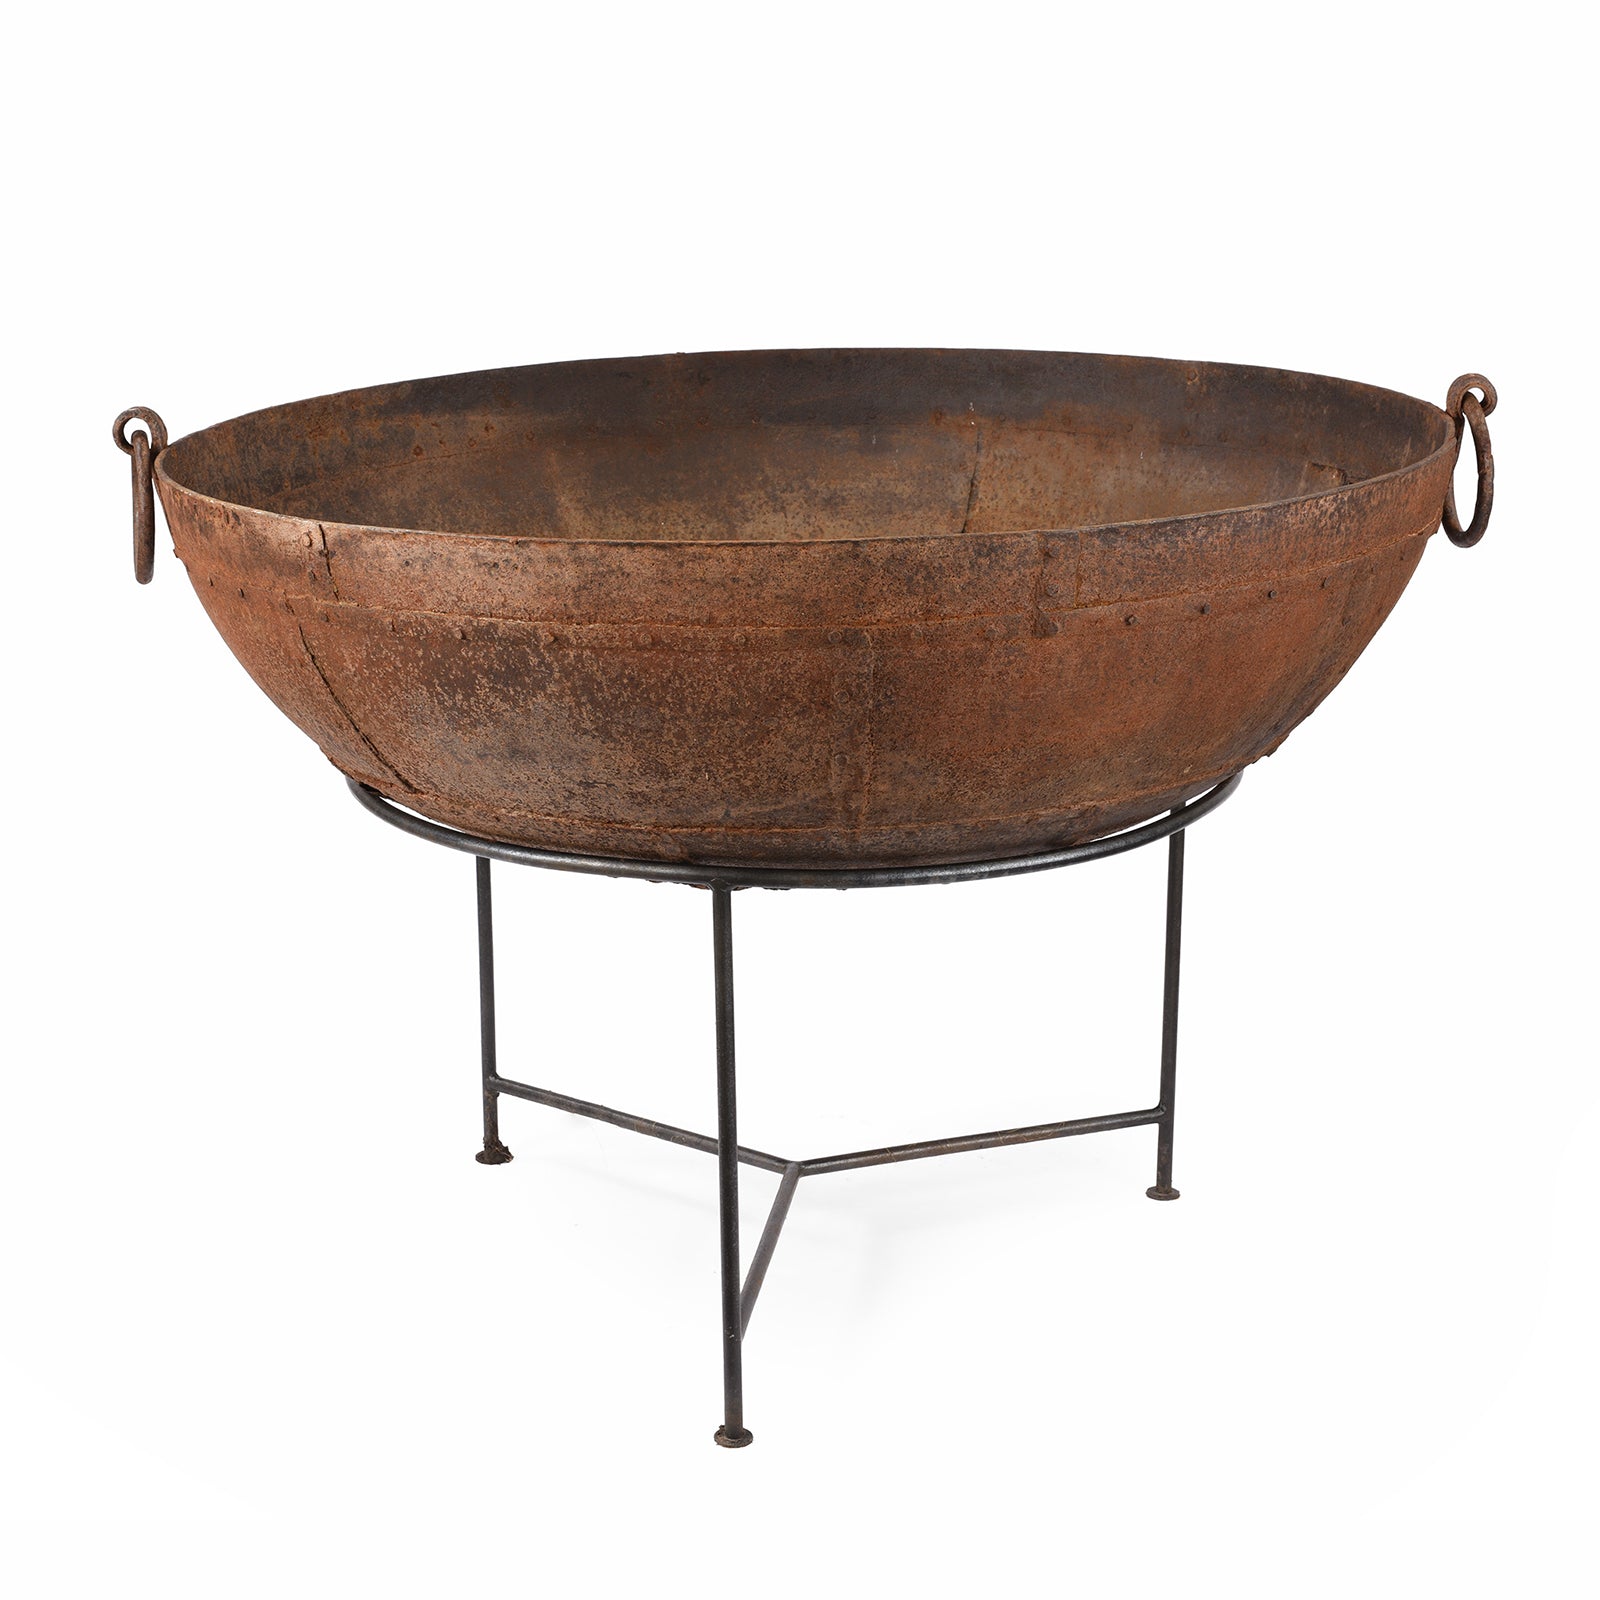 Old Indian Original Kadai Fire Bowl - 116cm diameter | Indigo Antiques